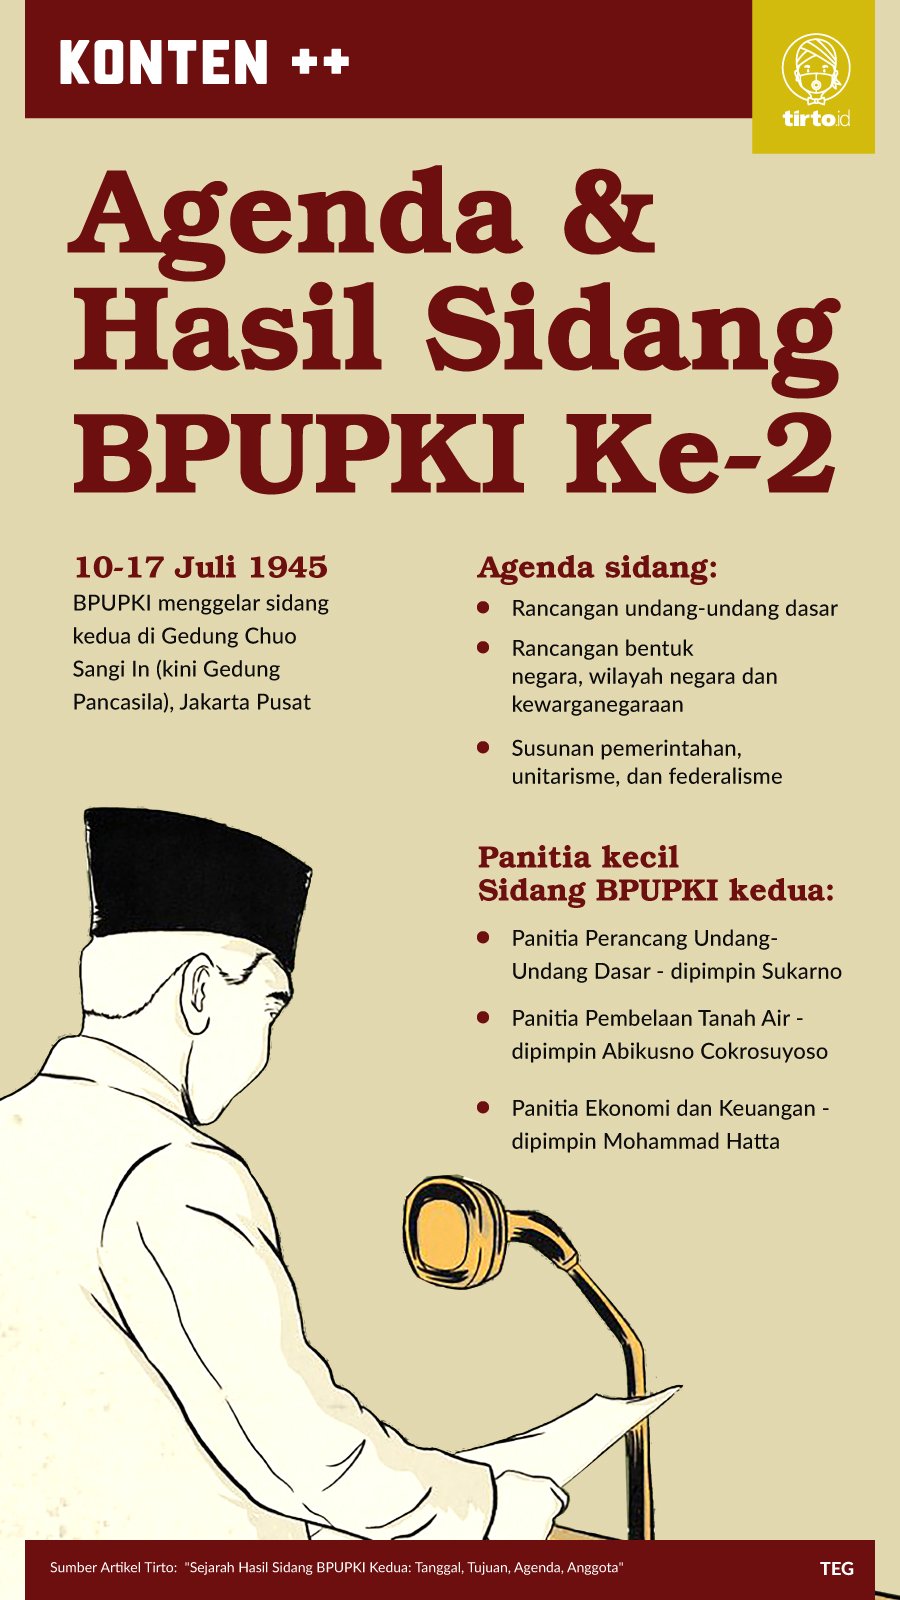 Pembahasan undang-undang dasar negara republik indonesia tahun 1945 dilakukan dalam sidang